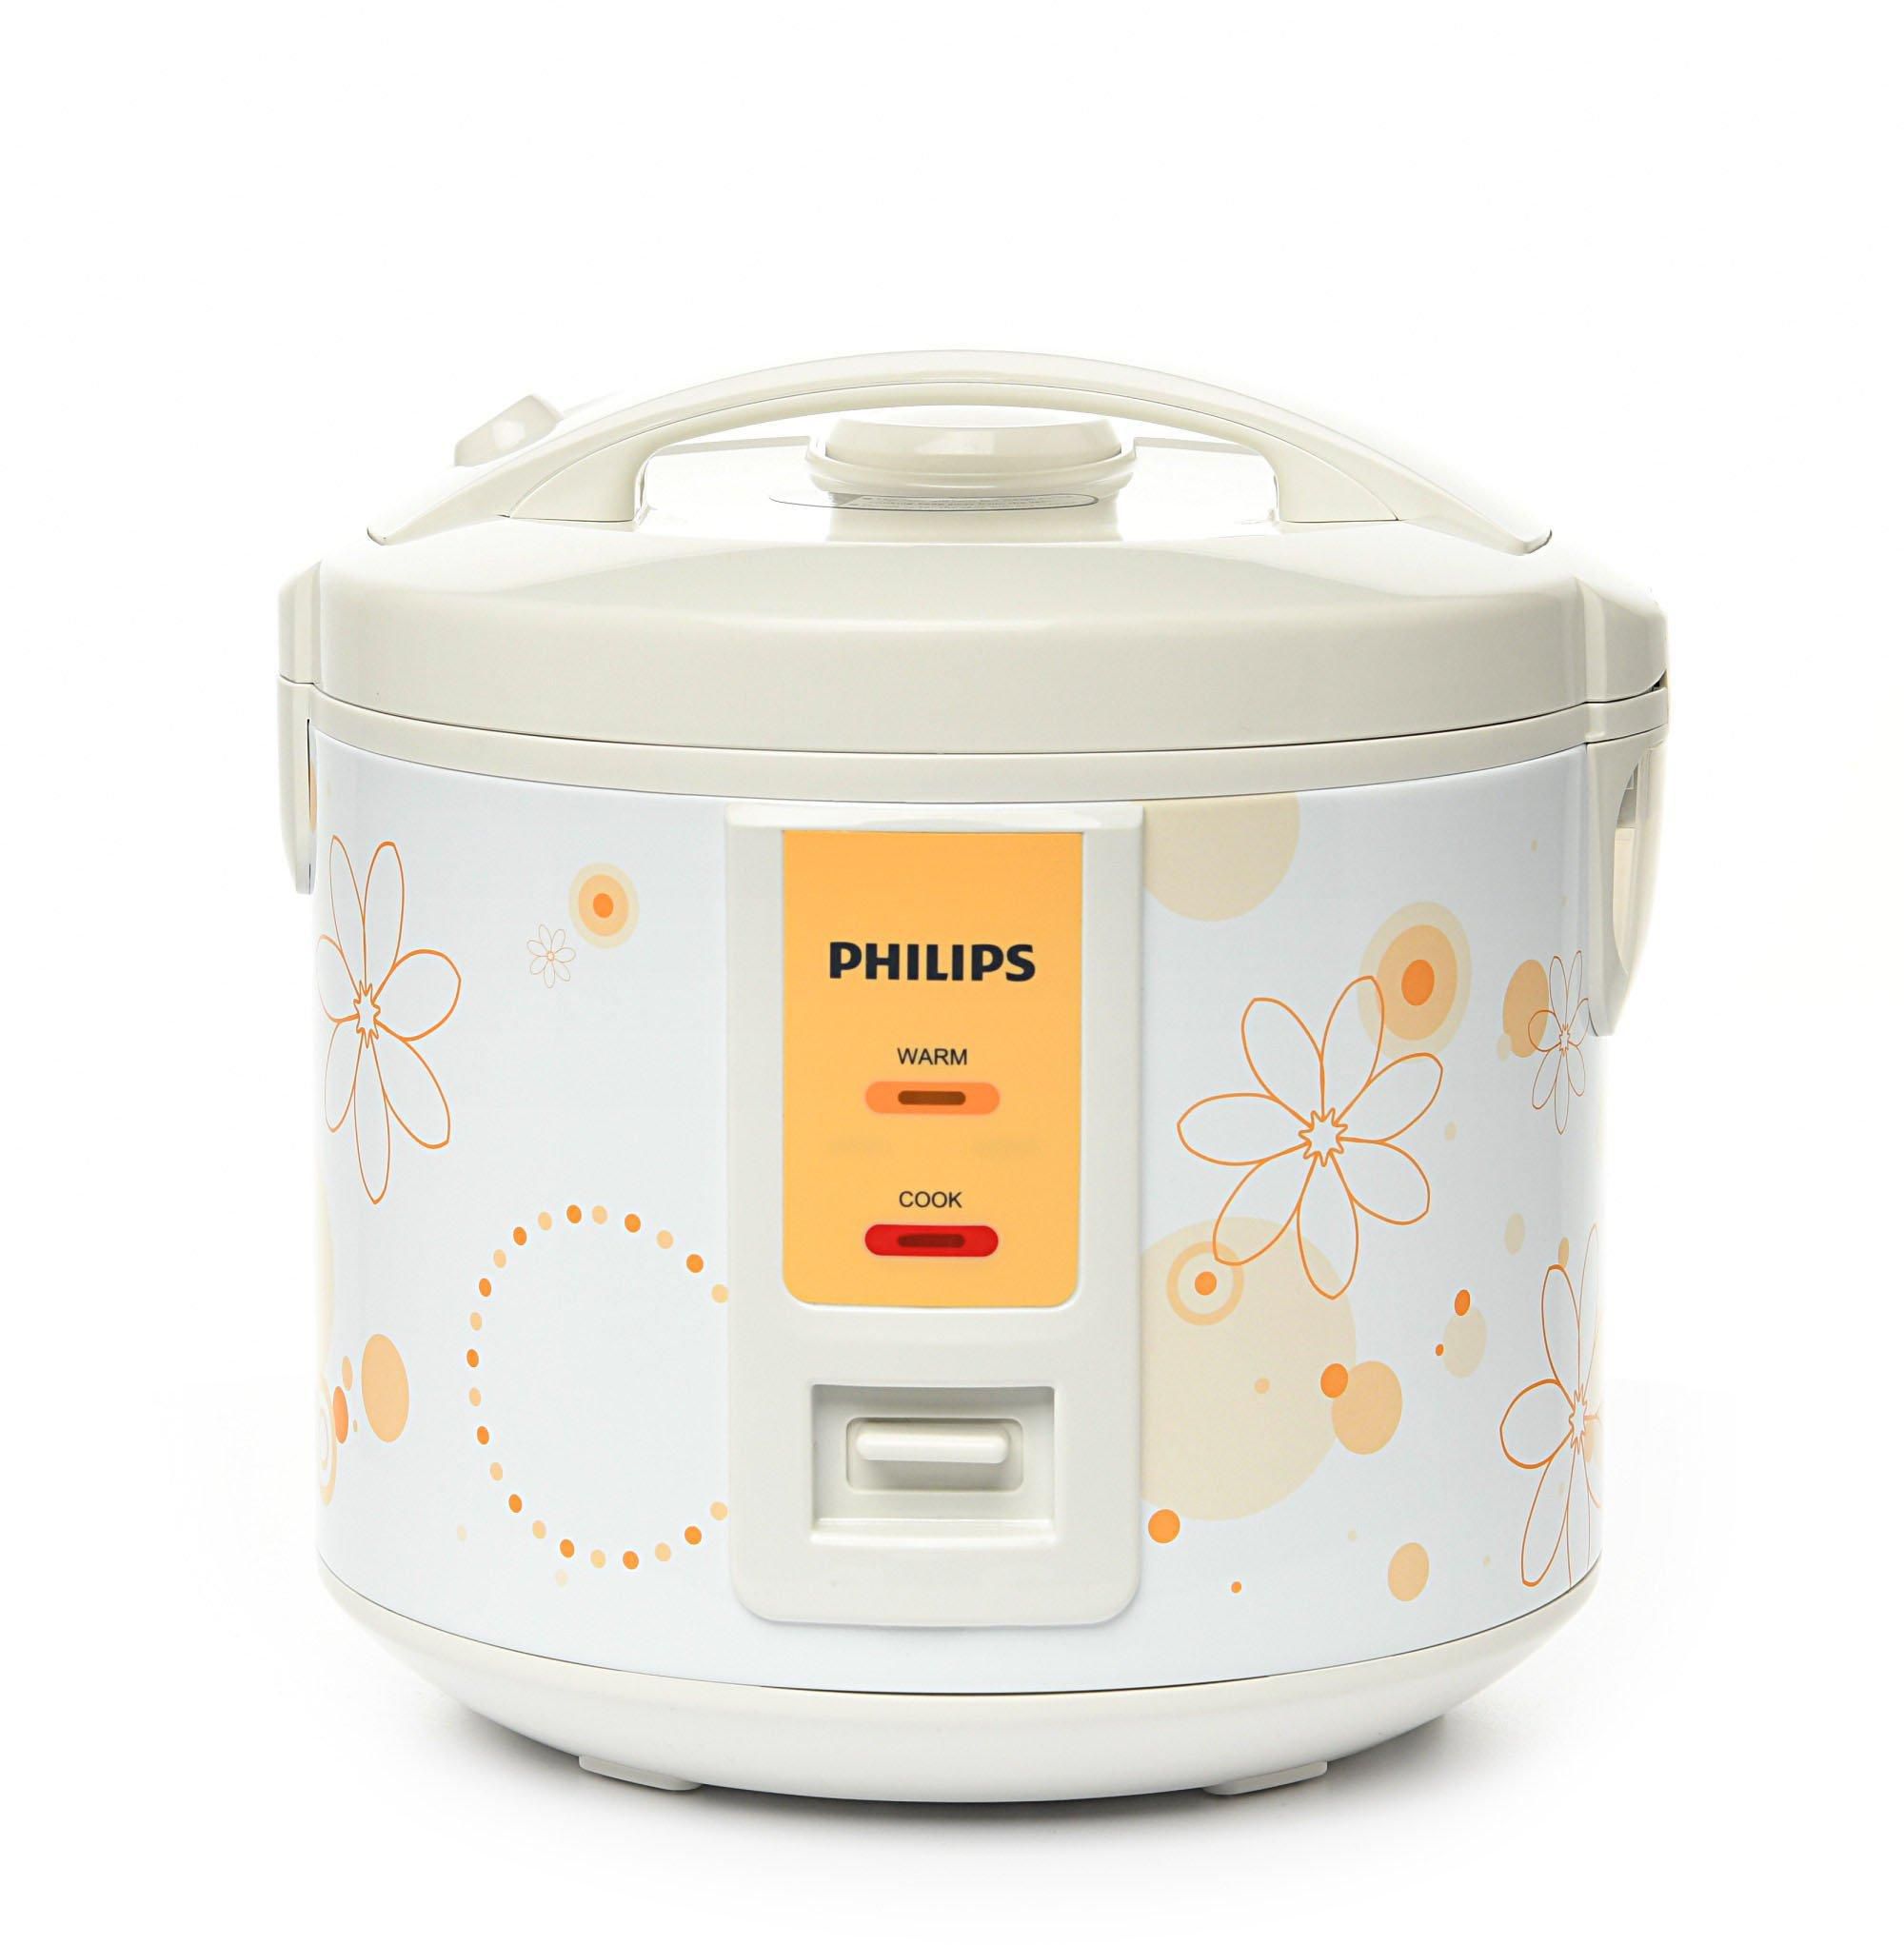 Philips Rice Cooker, 650W, 1.8Liter.